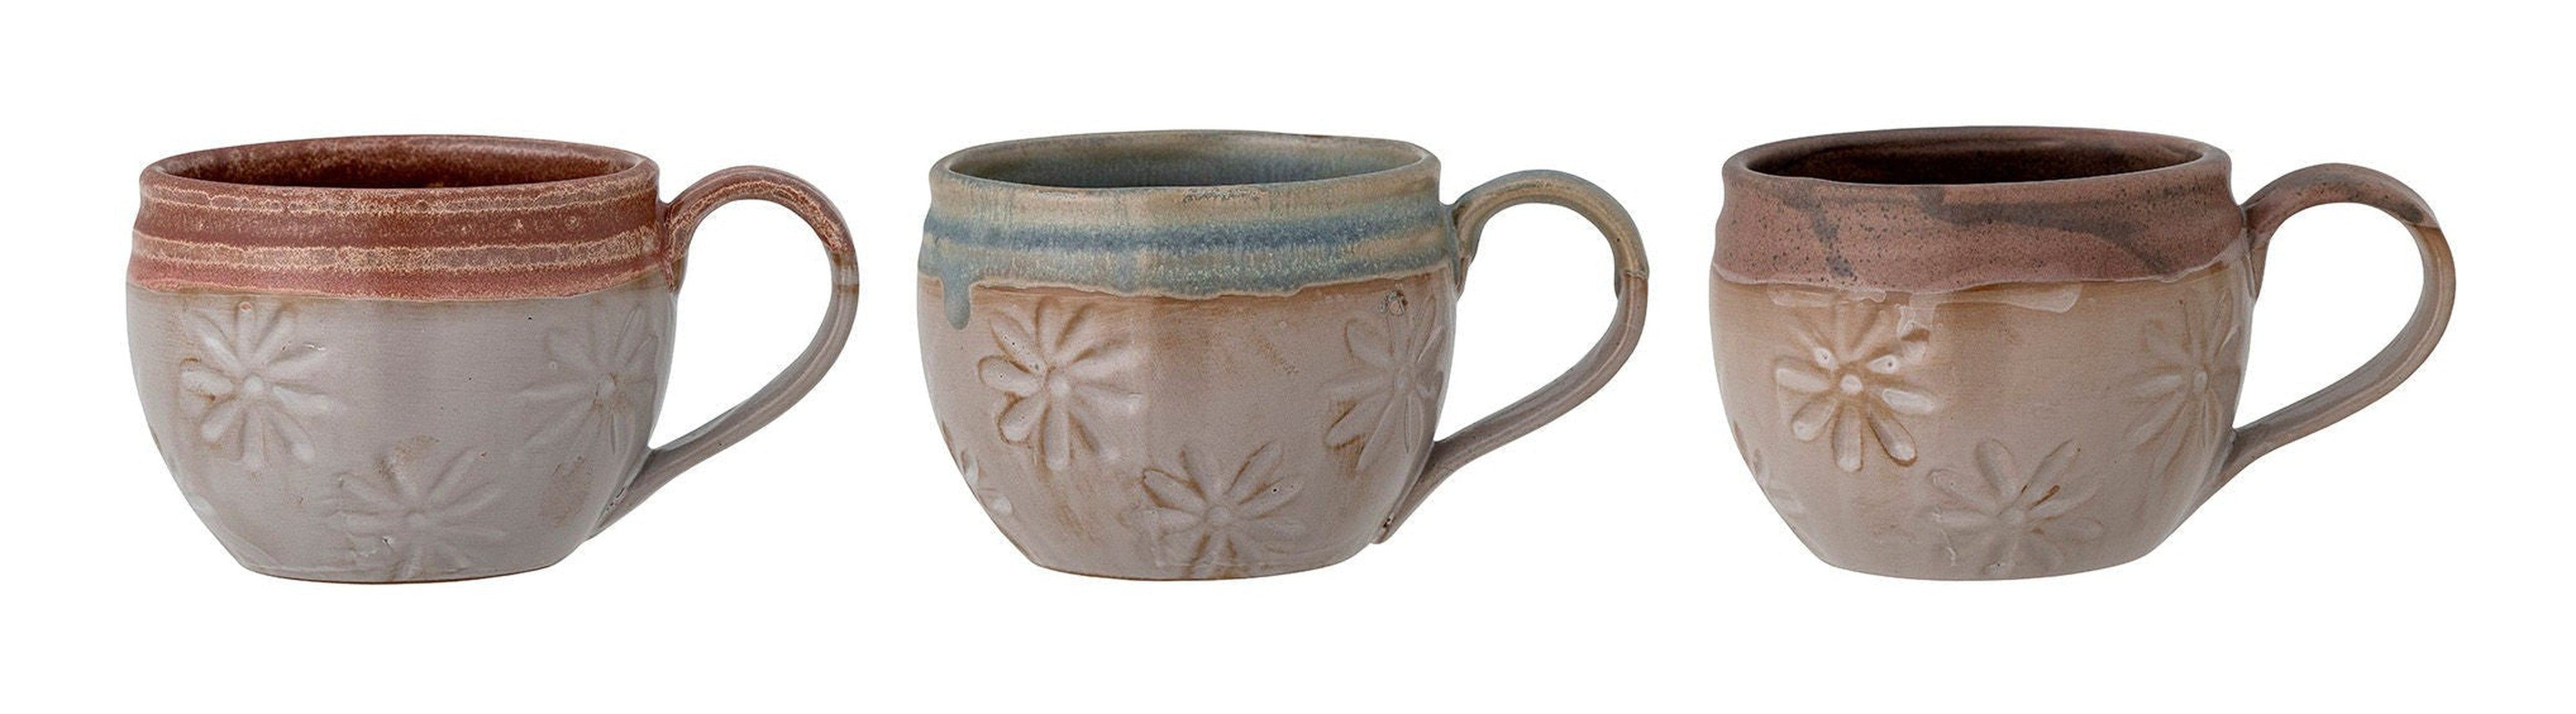 Creative Collection Aster Mug, Brown, Stoneware